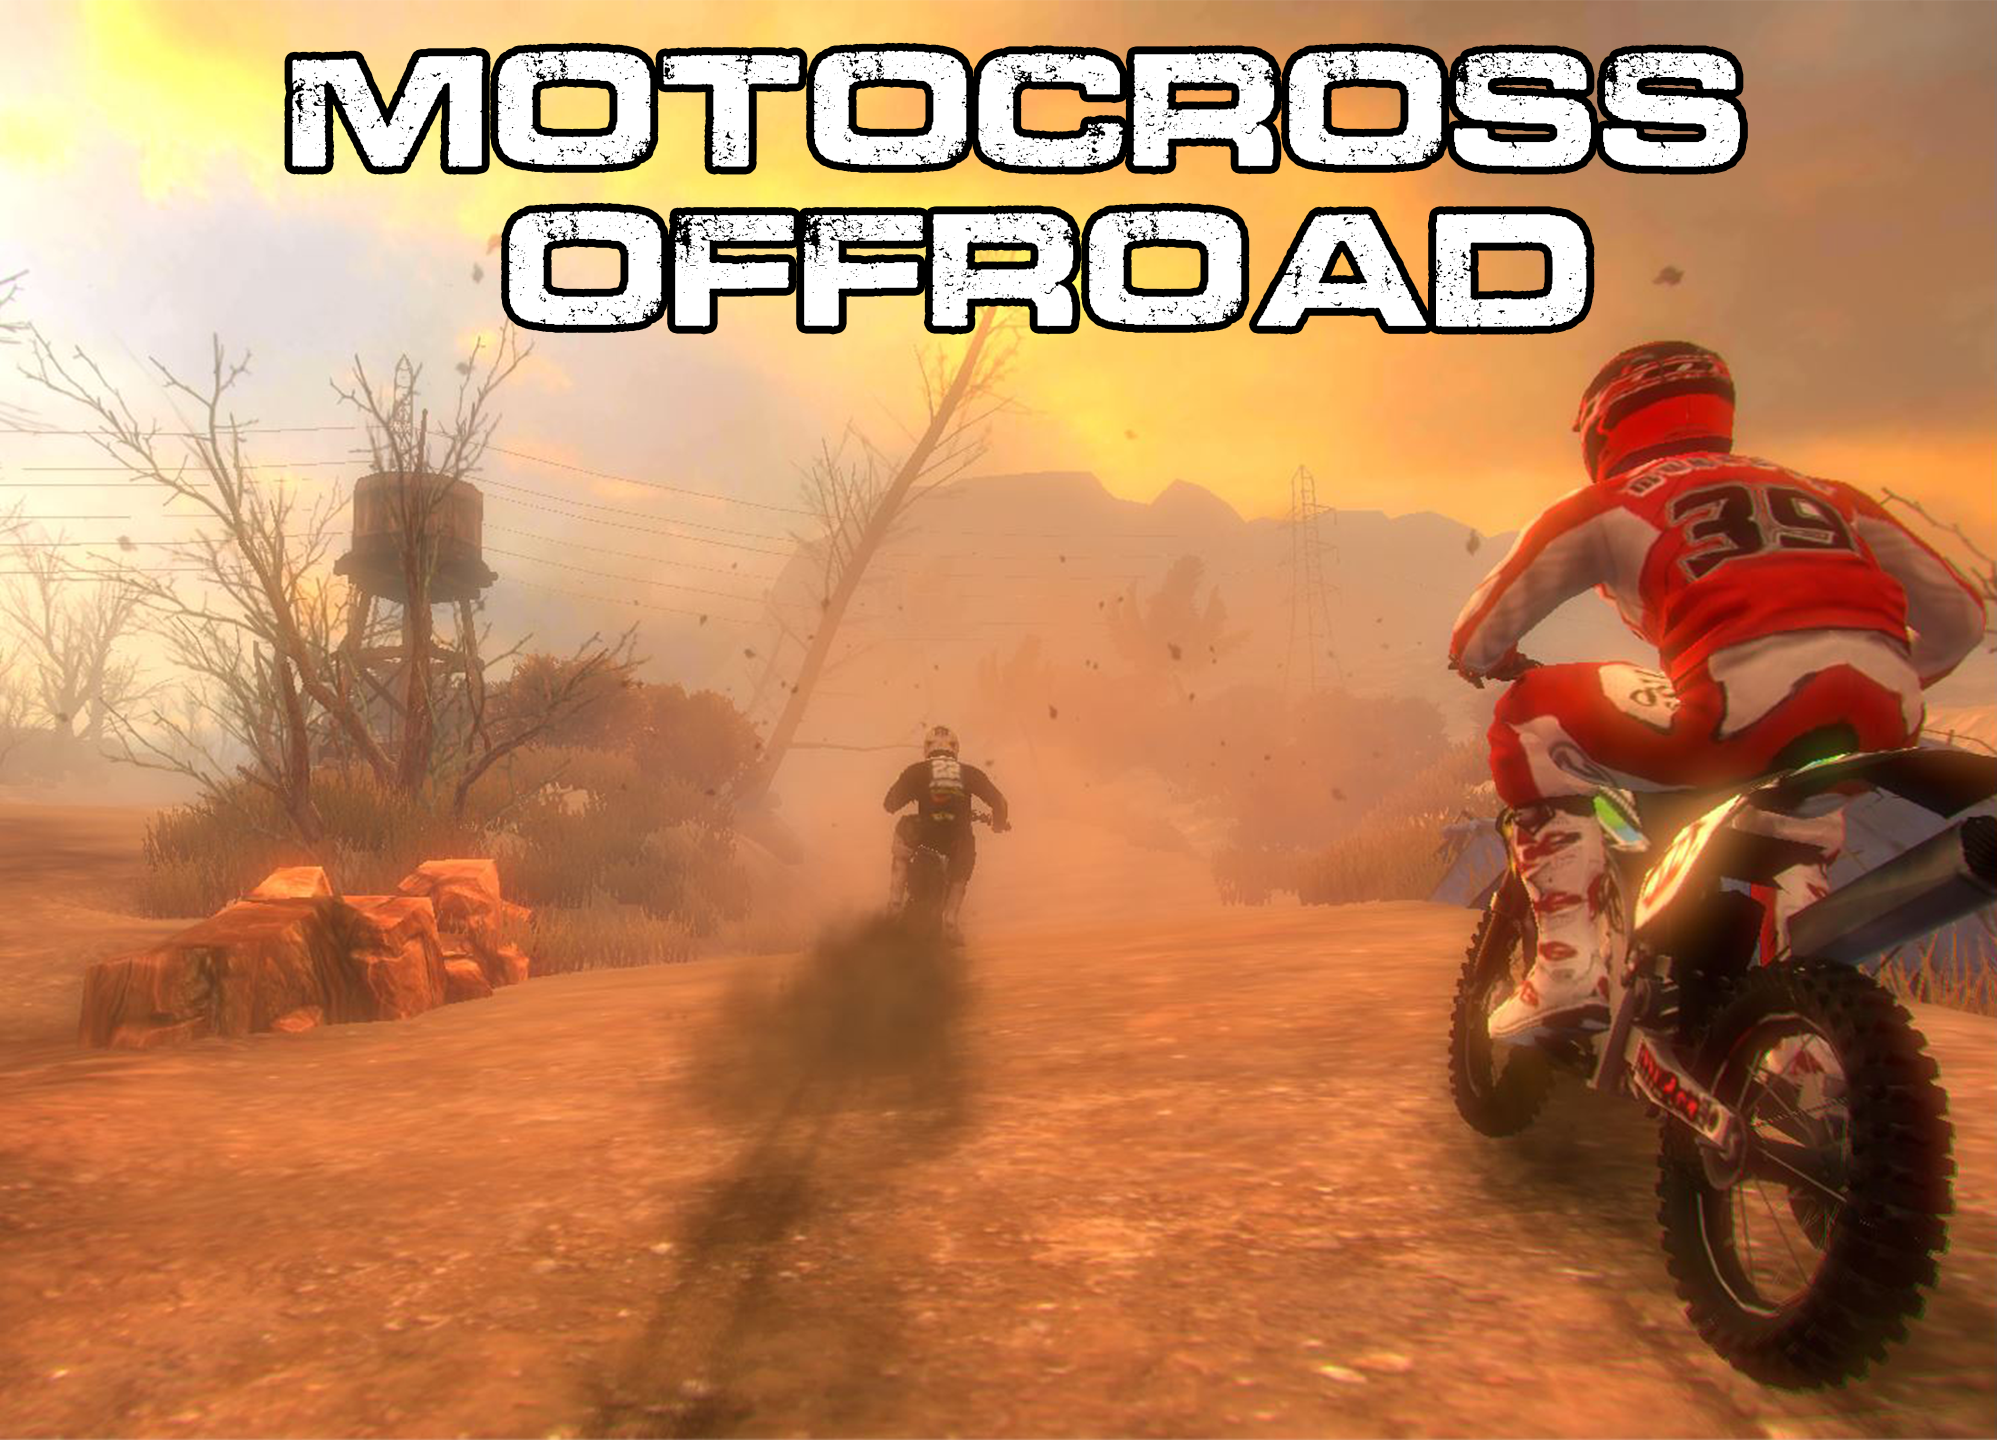 Motocross / Offroad